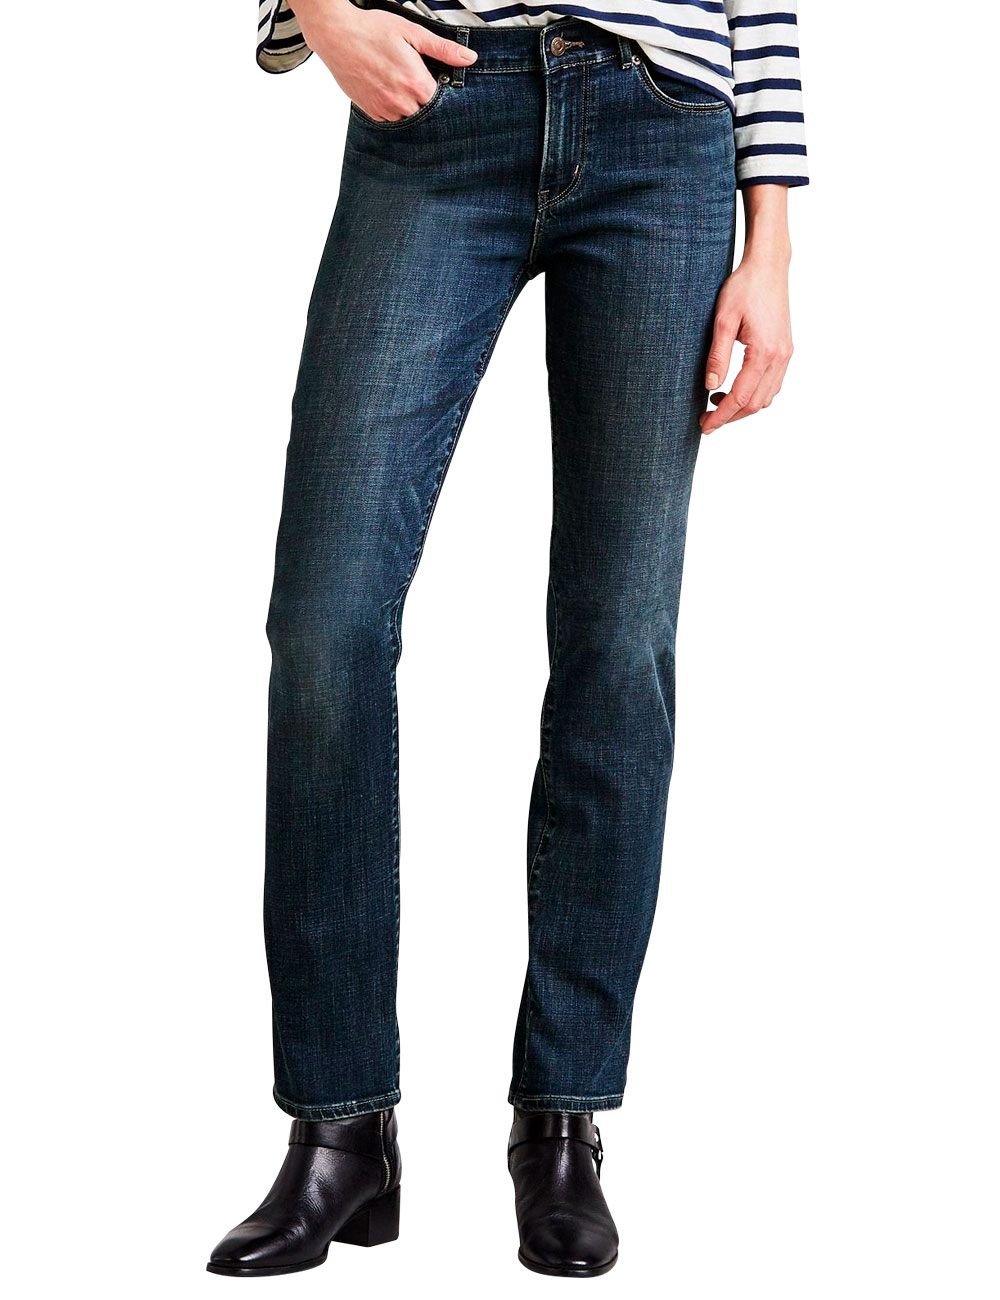  Levi s  jeans  Classic Straith femme denim bleu